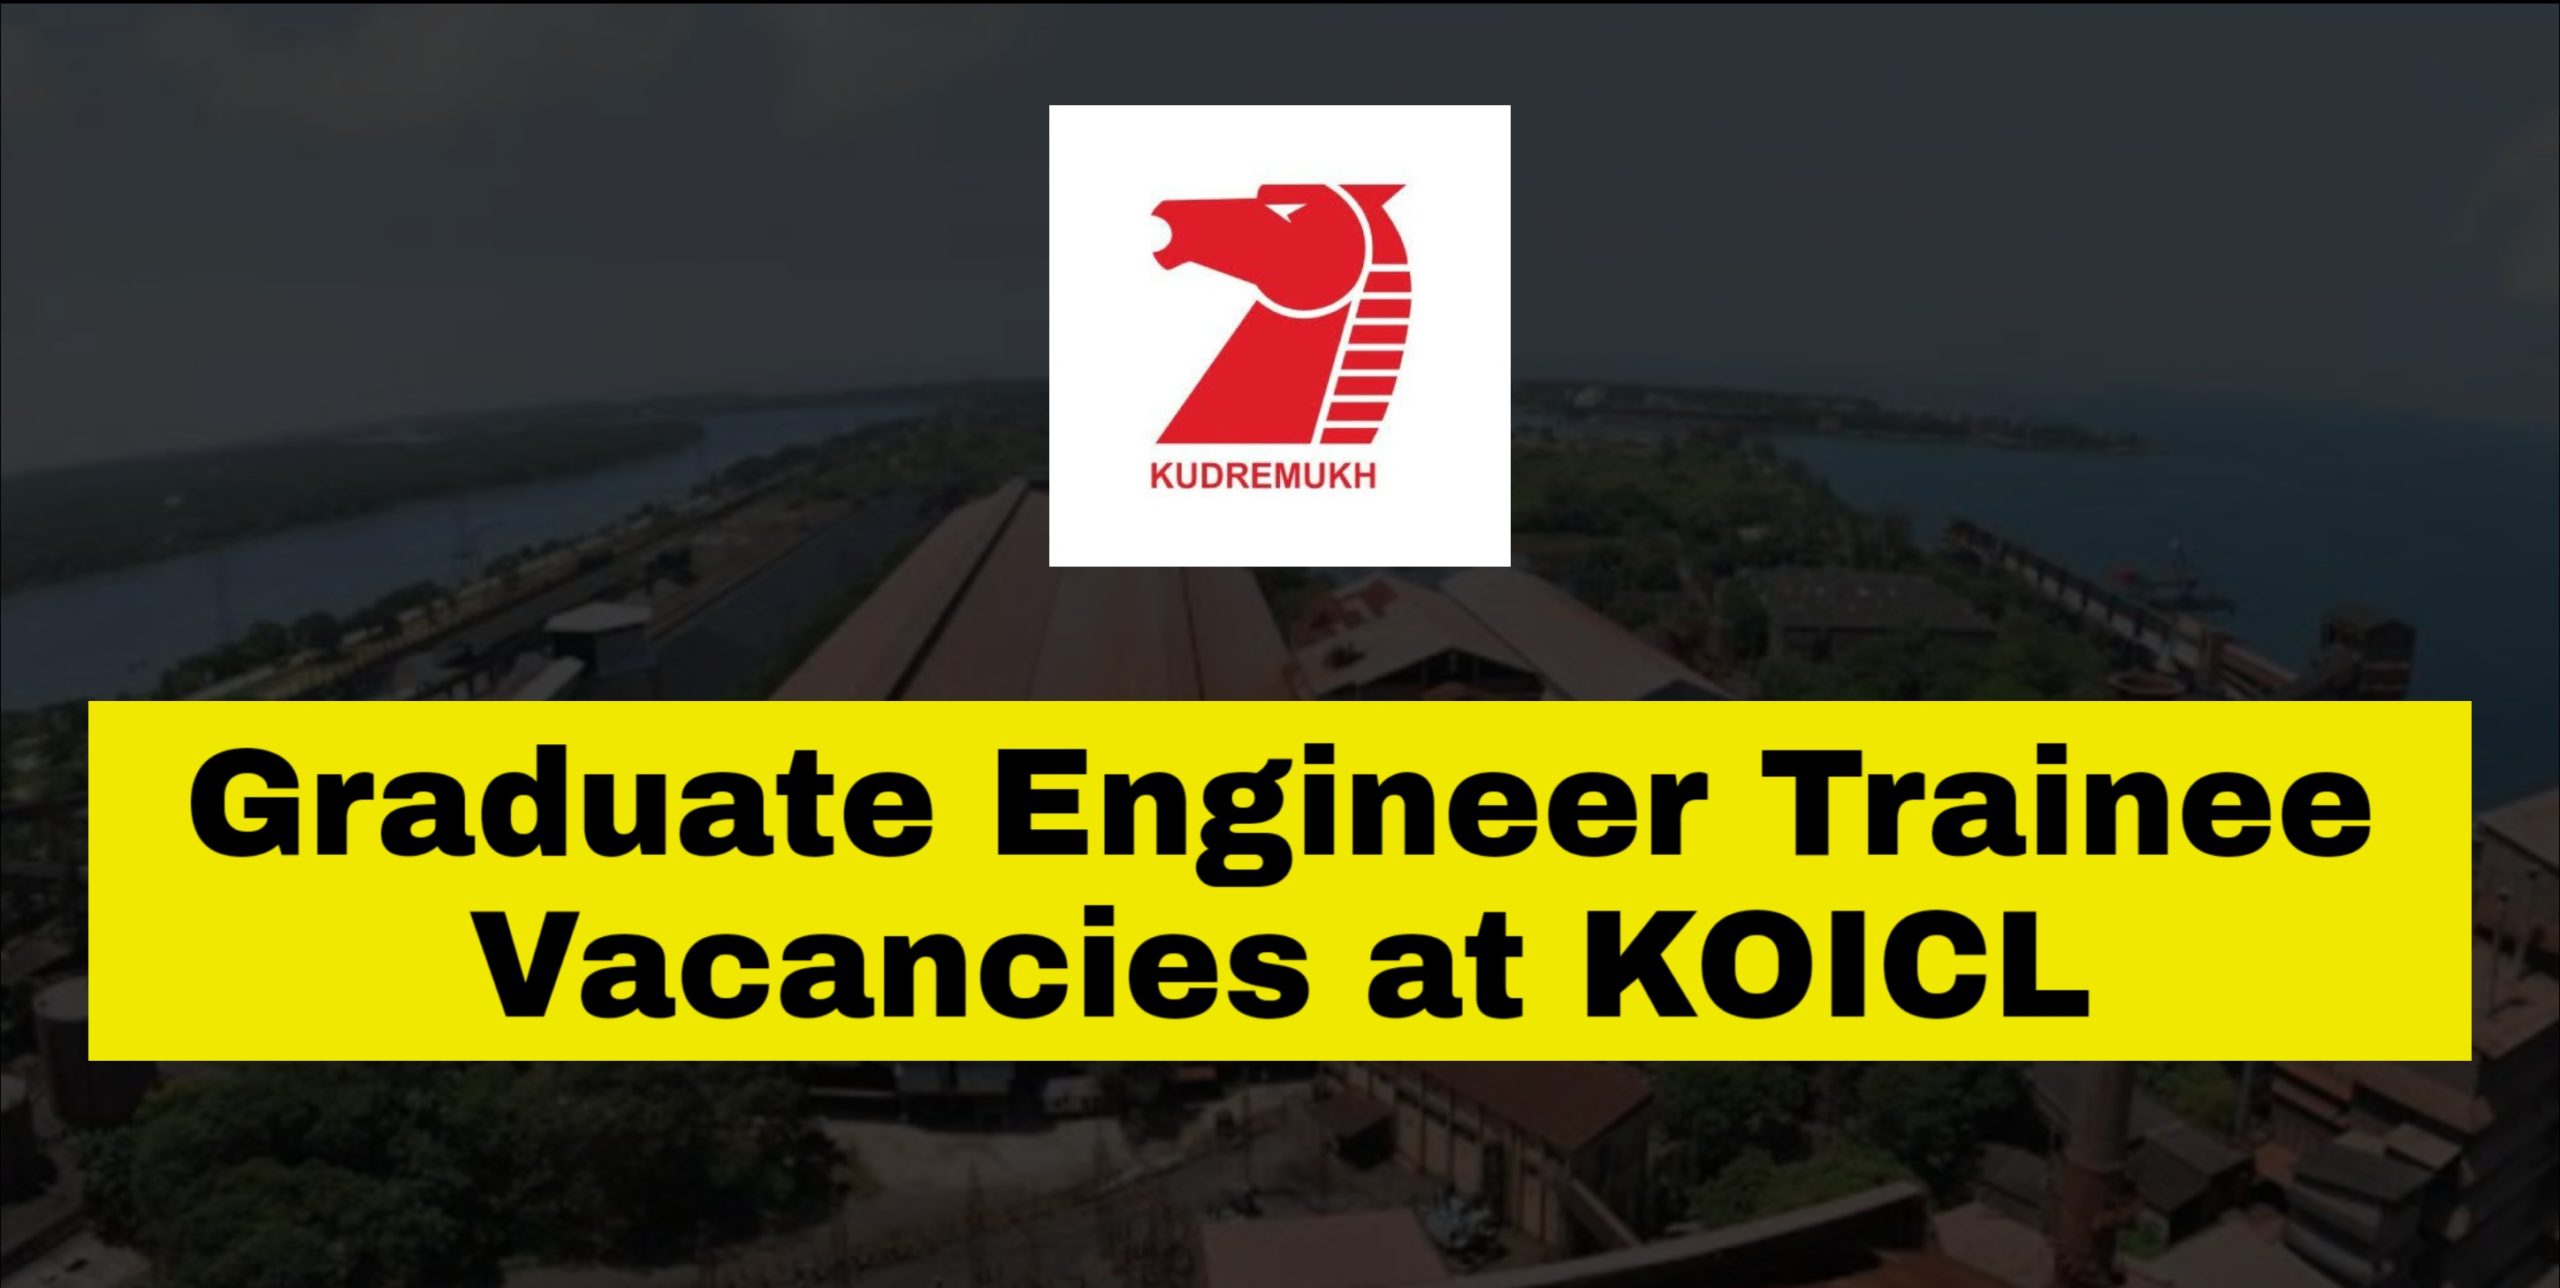 Graduate Engineer Trainee Vacancies - KOICL limited Recruitment 2020